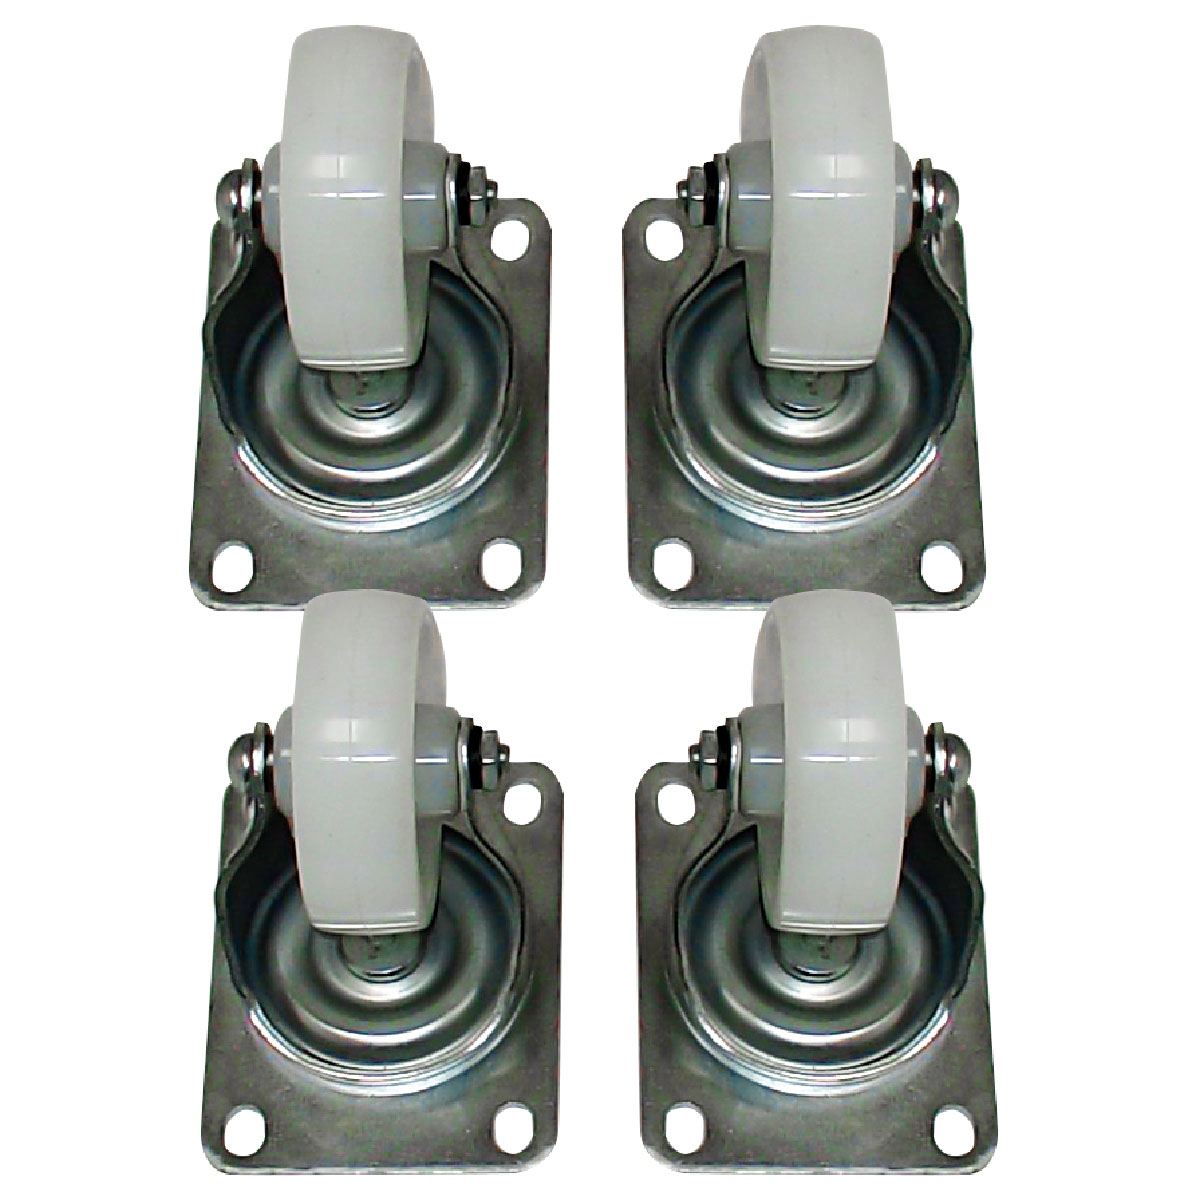 4 Castors For Use With AEK2, AEK4 & AEK5 Lockers